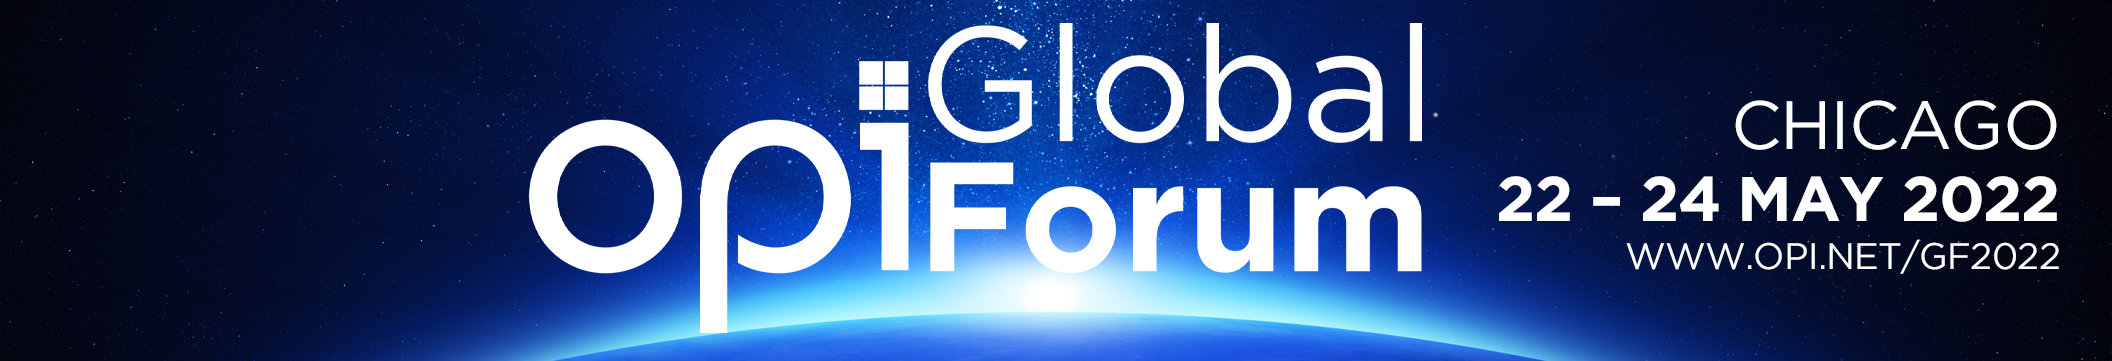 OPI Global Forum 2022